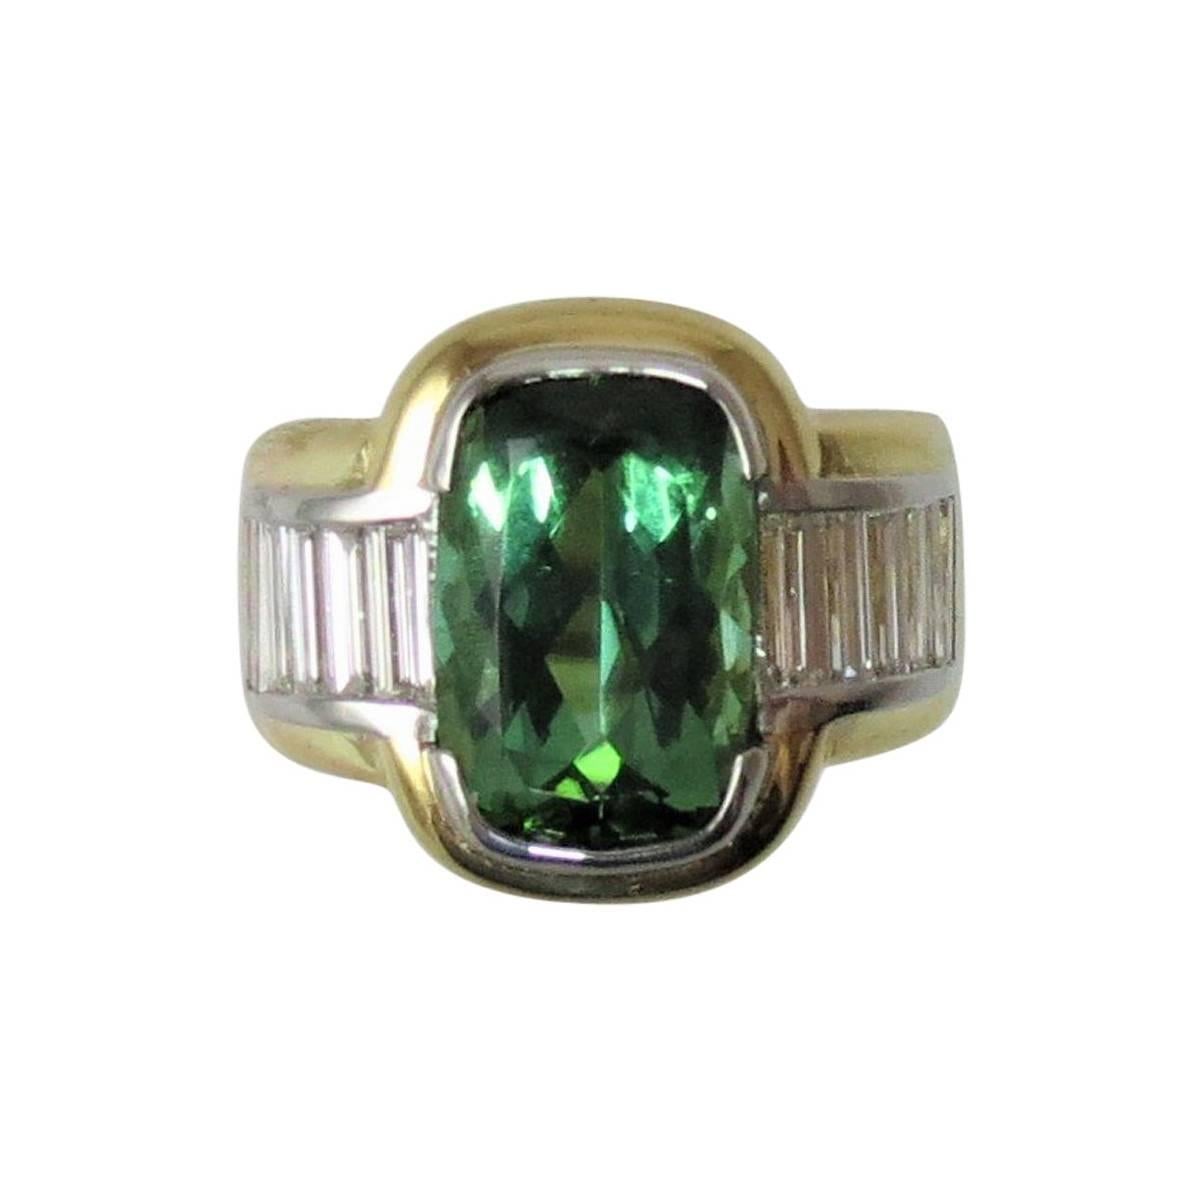  Green Tourmaline  Diamond Ring by Susan Berman